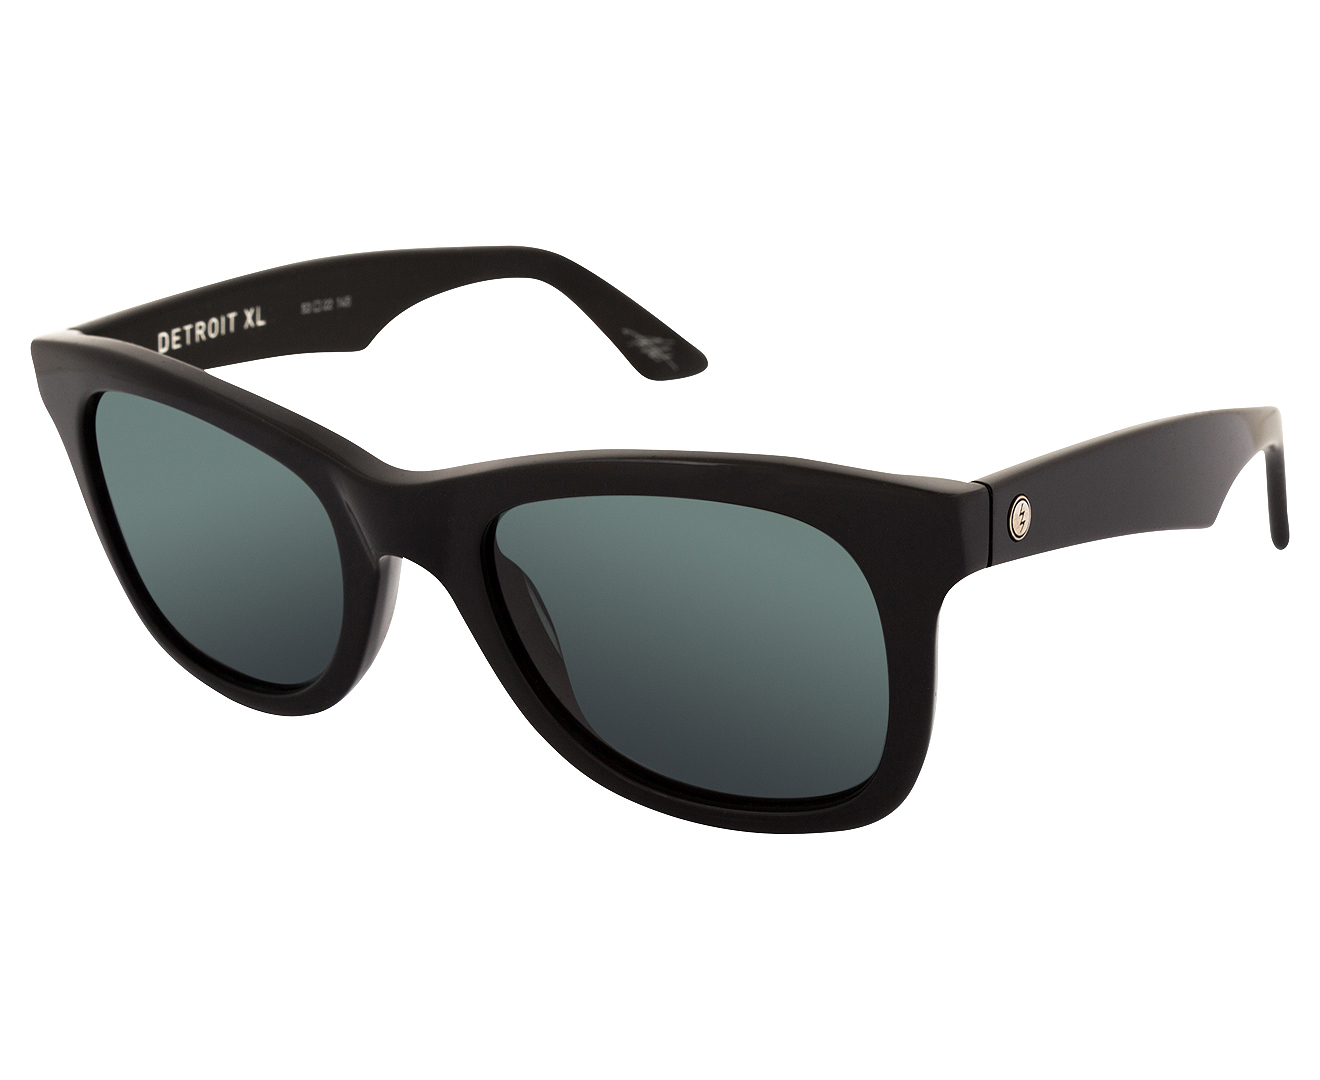 Electric Detroit XL Sunglasses - Gloss Black/Grey | Www.catch.com.au